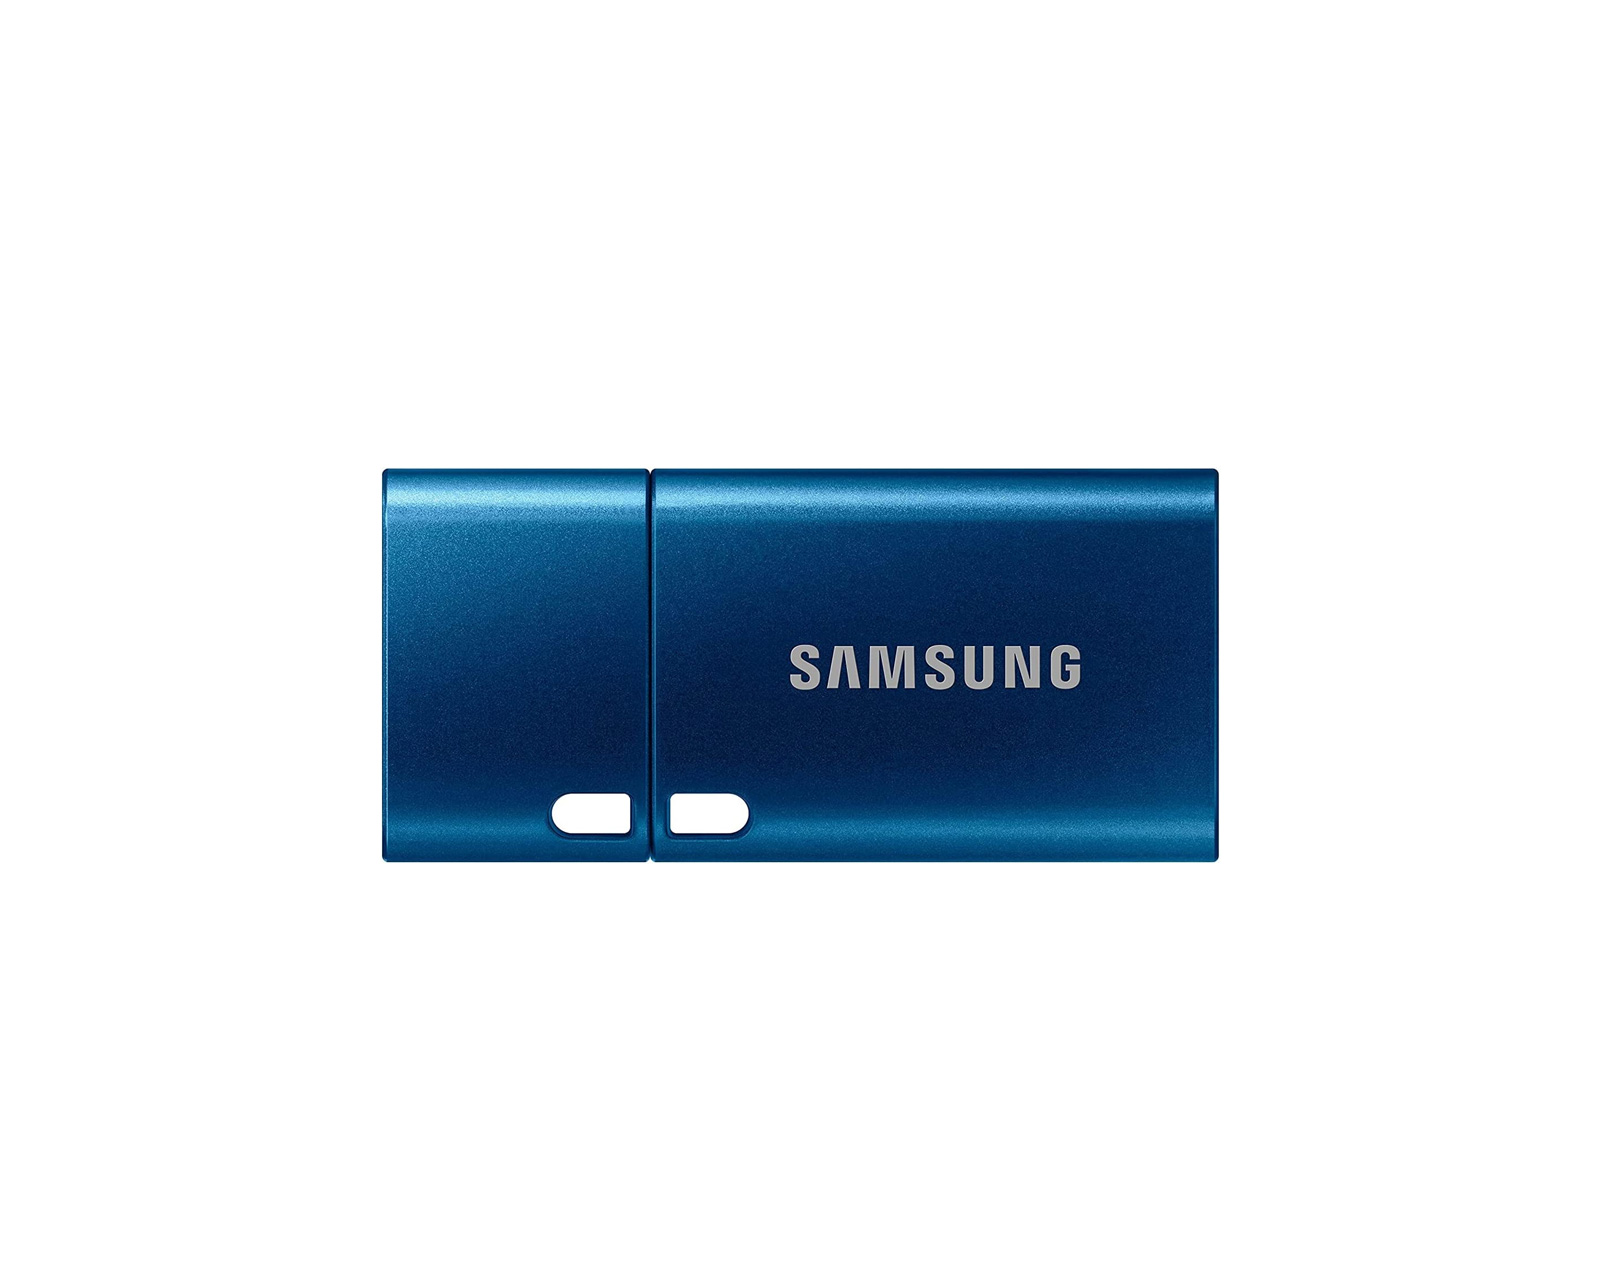 Samsung USB Type-C Flash Drive 256GB - Blue 